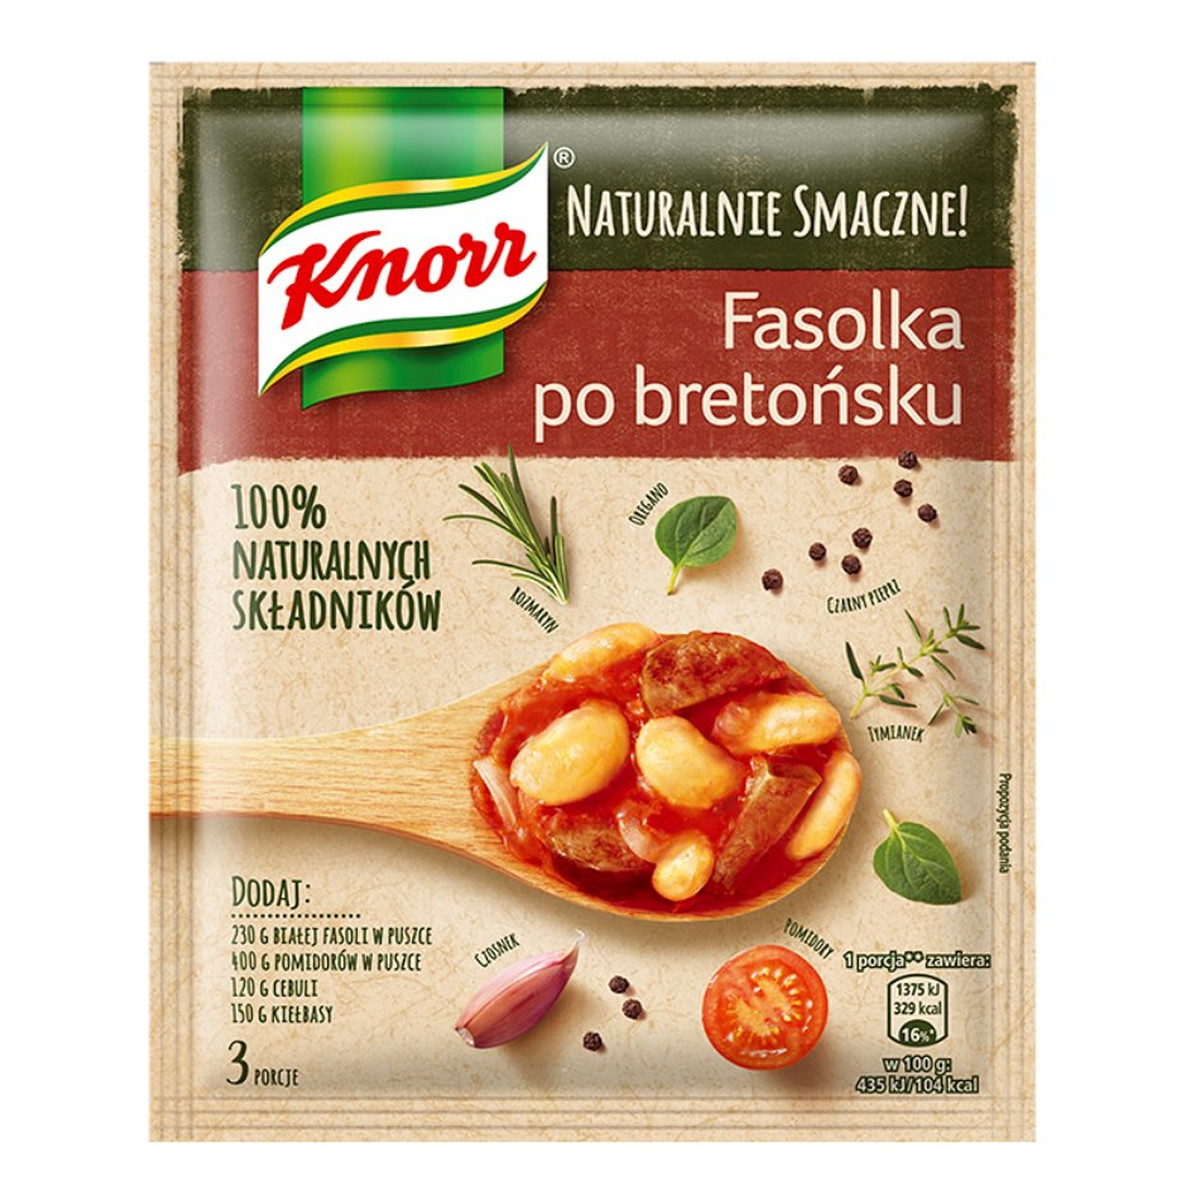 Knorr Naturalnie Smaczne fasolka po bretońsku 43g